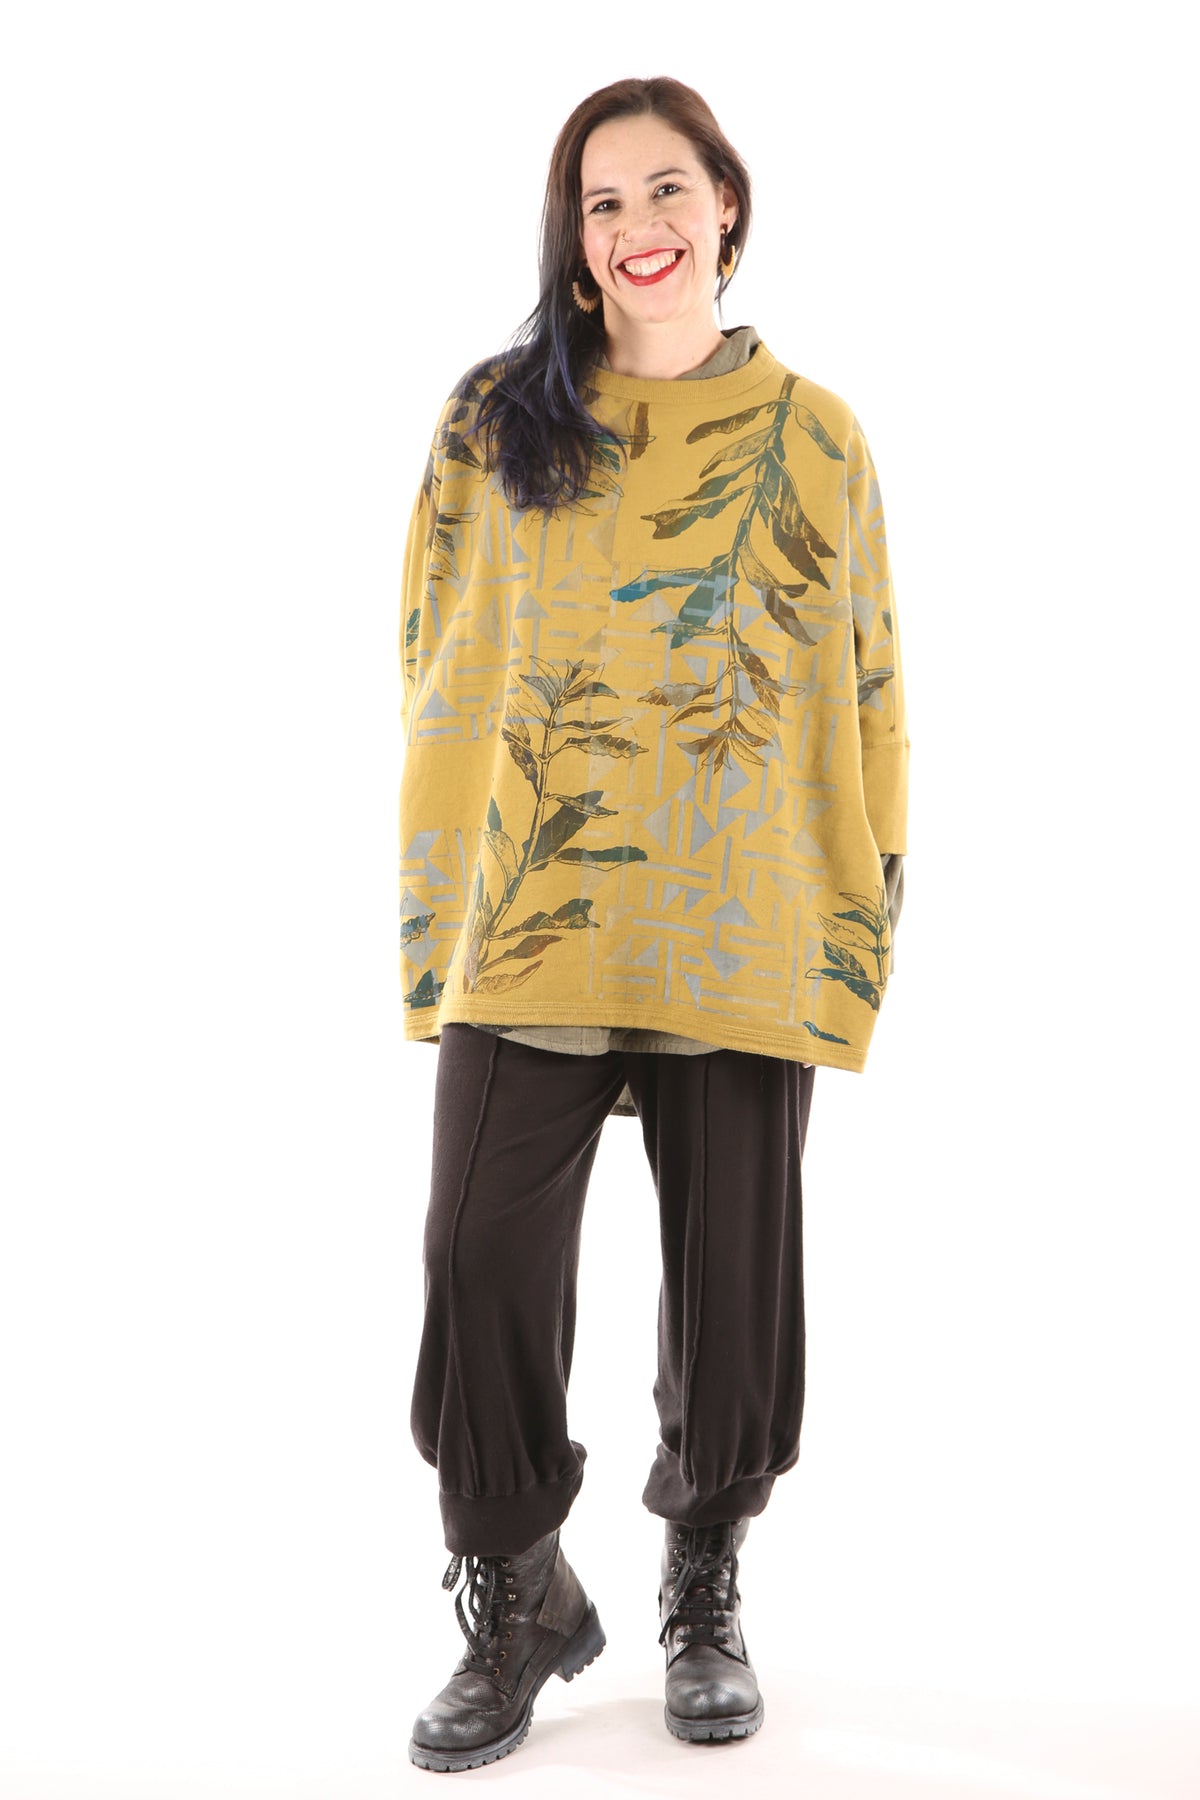 2210 Cozy Fleece Square Sweatshirt -Osage-Spice Leaf Windows